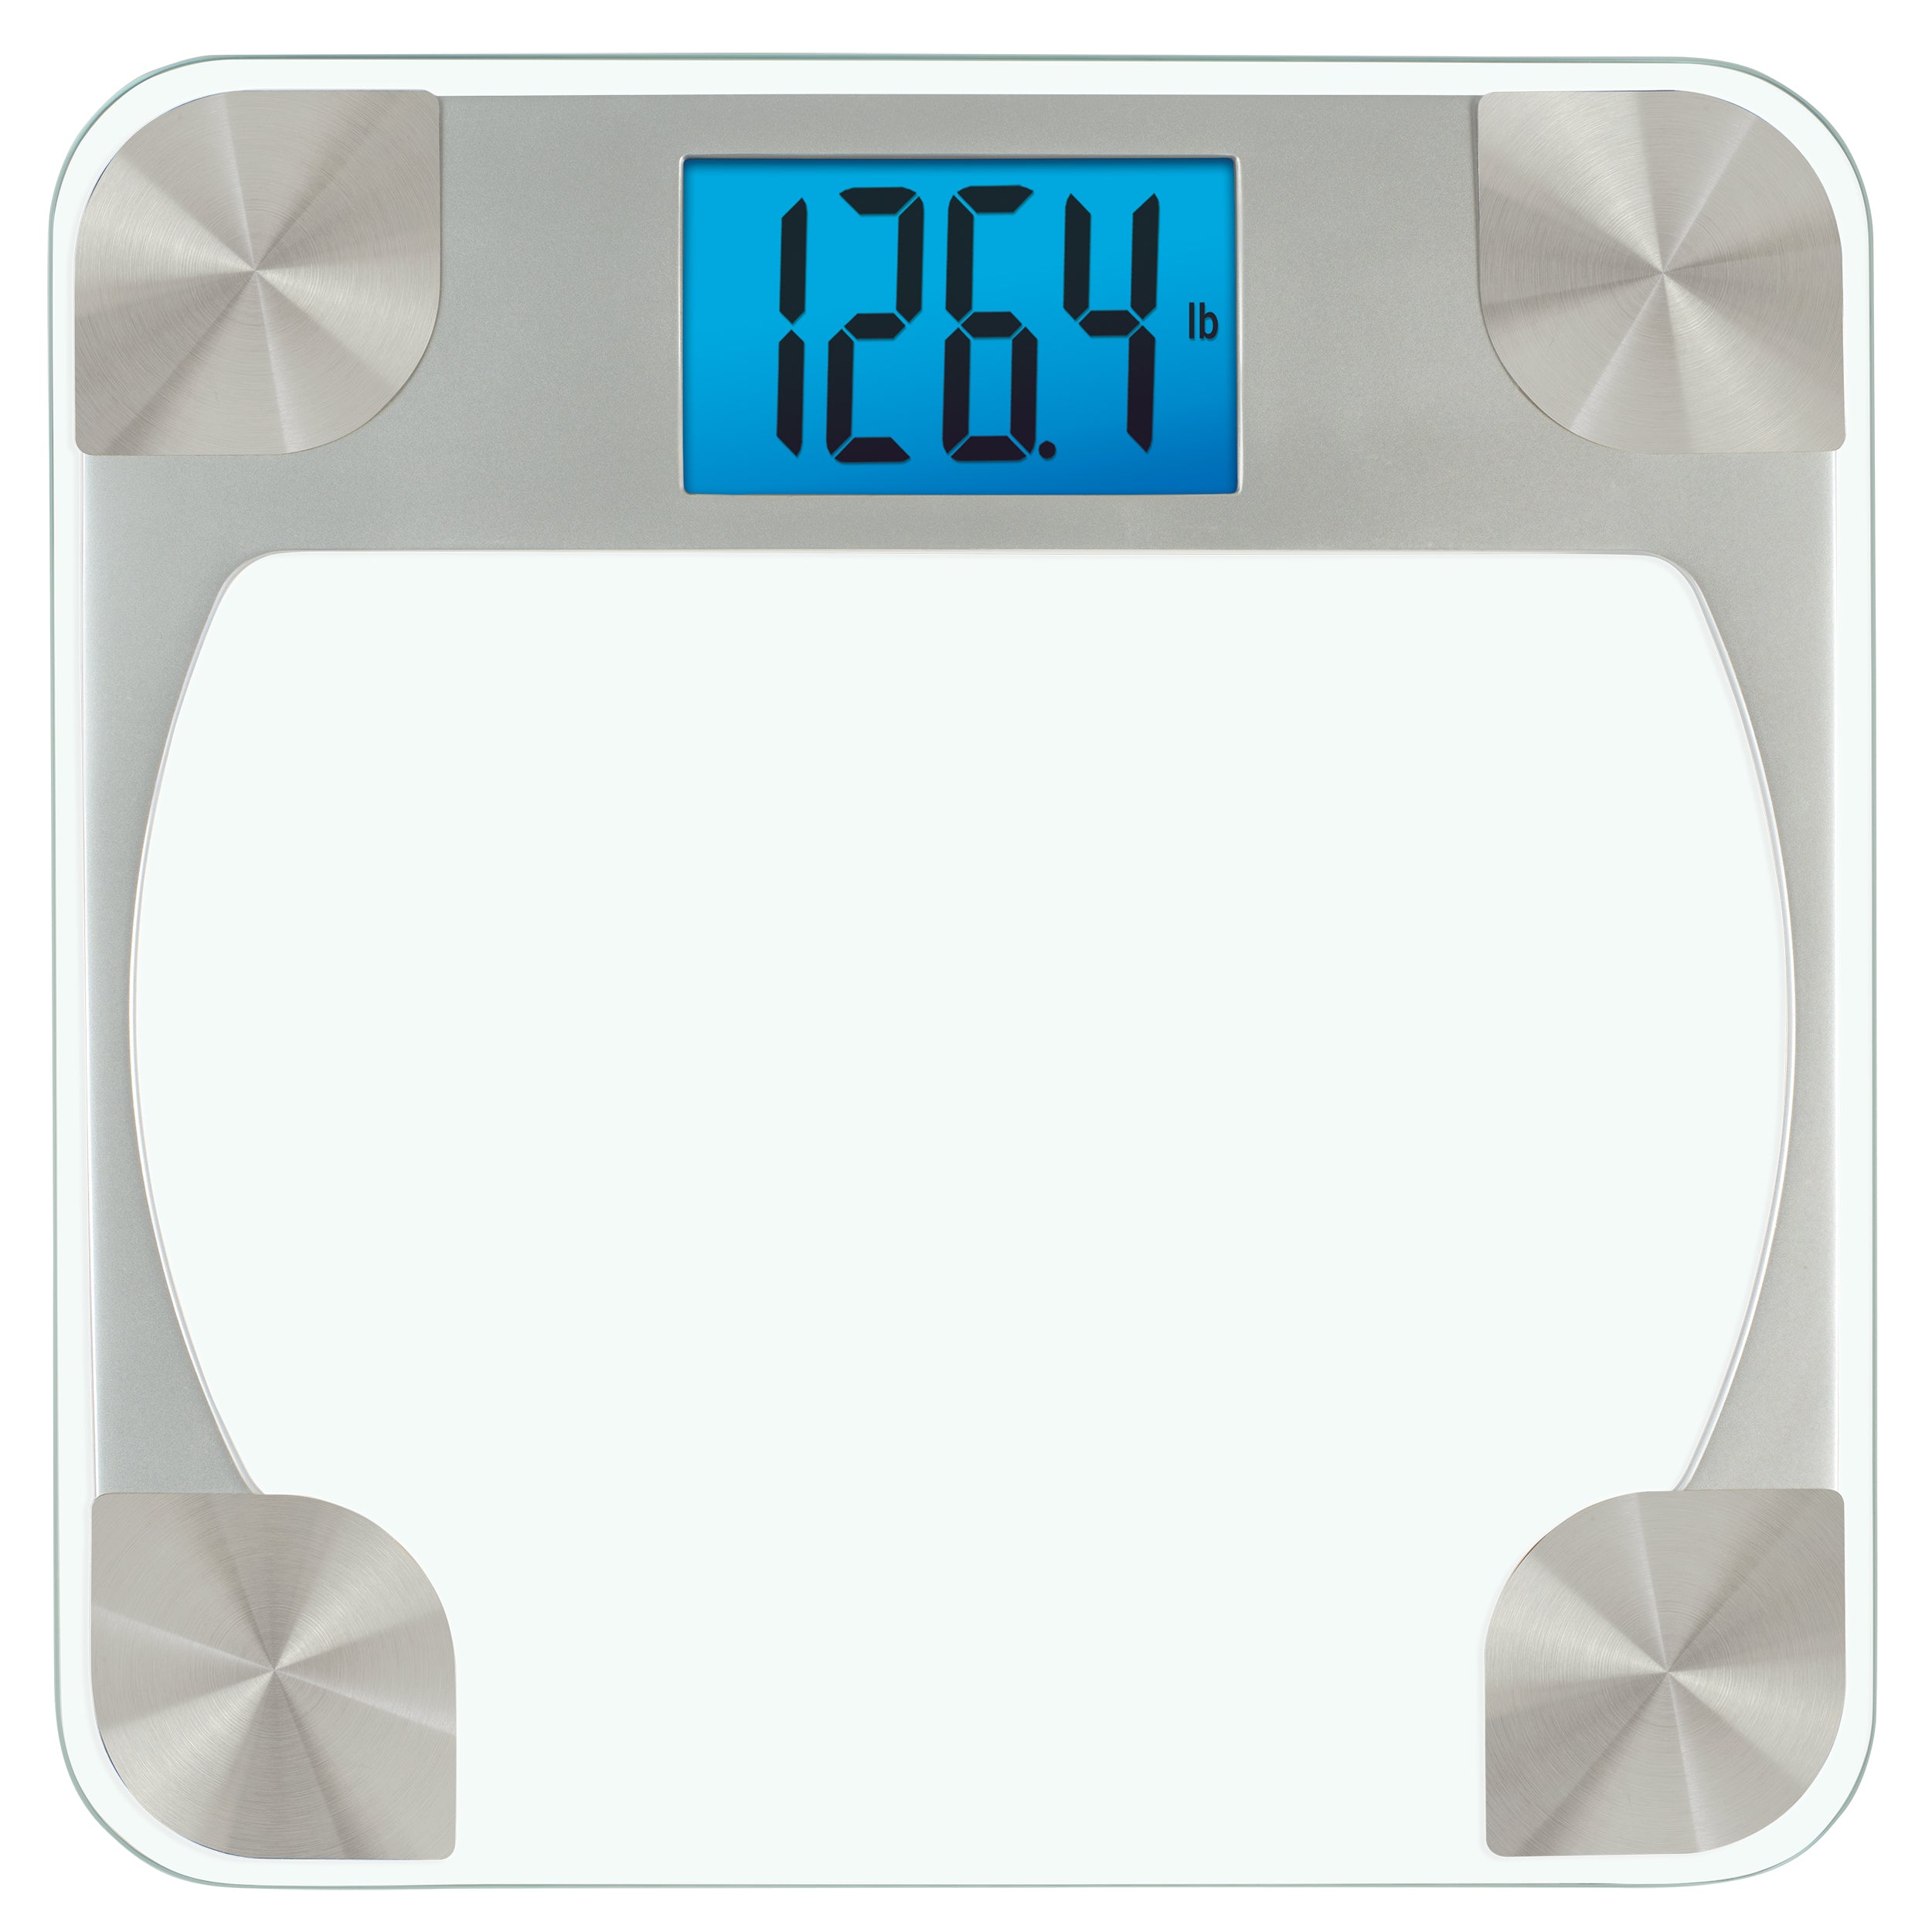  Taylor Digital Glass Bathroom Scale for Body Weight